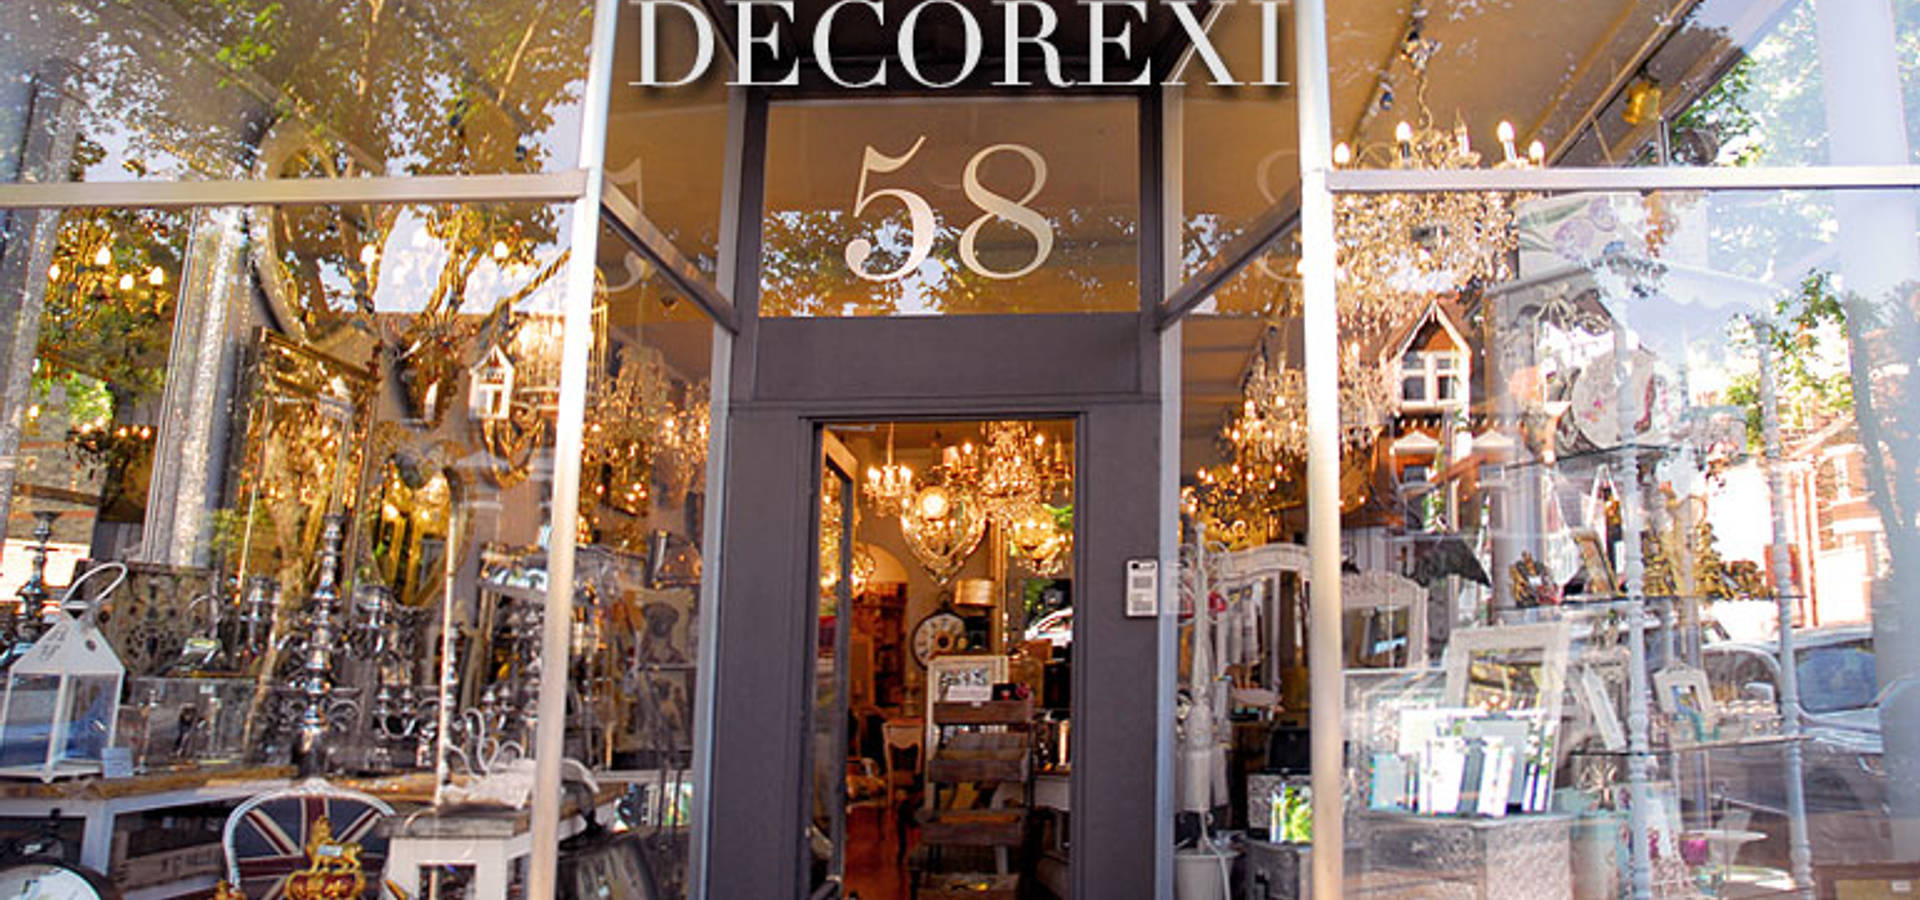 Decorexi A World of Interiors